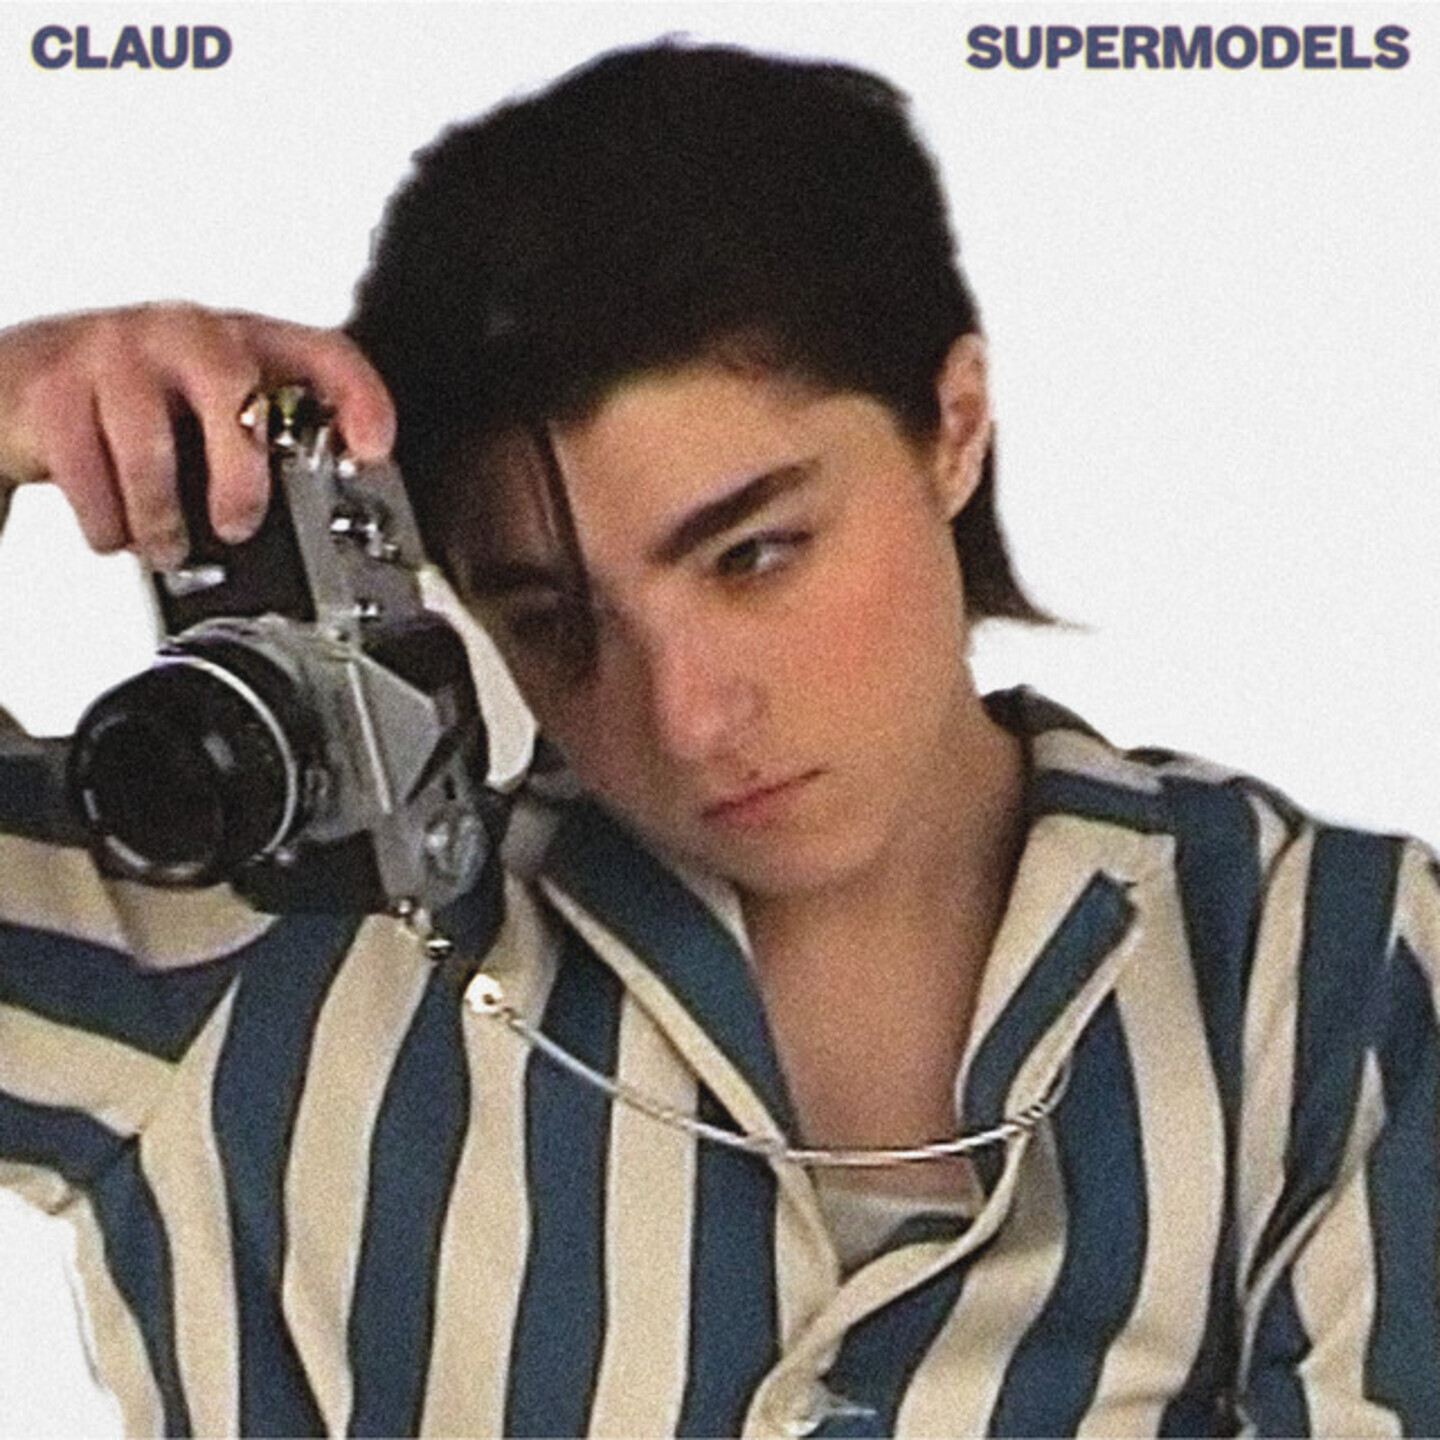 CLAUD - Supermodels LP (Cloud Vinyl)